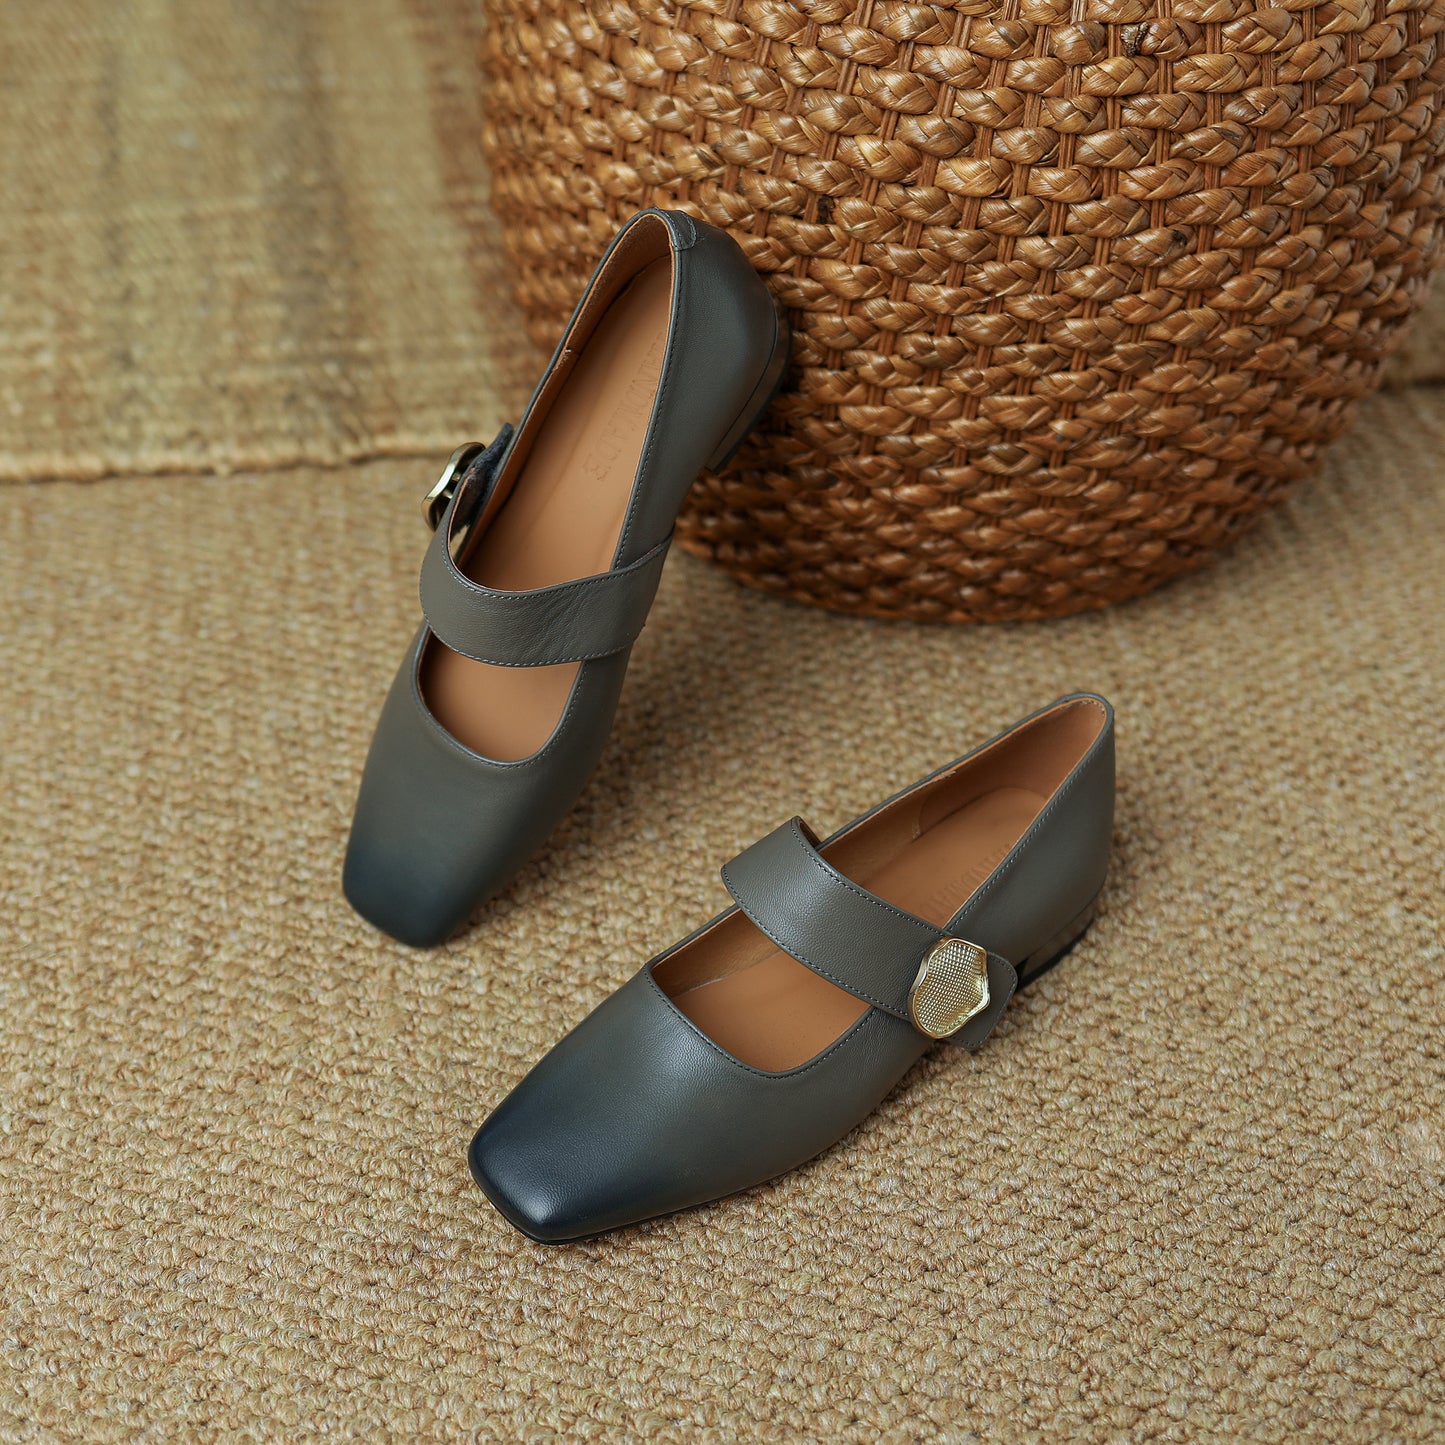 TinaCus Women's Genuine Leather Handmade Square Toe Flat Heel Metal Buckle Mary Jane Dress Shoes